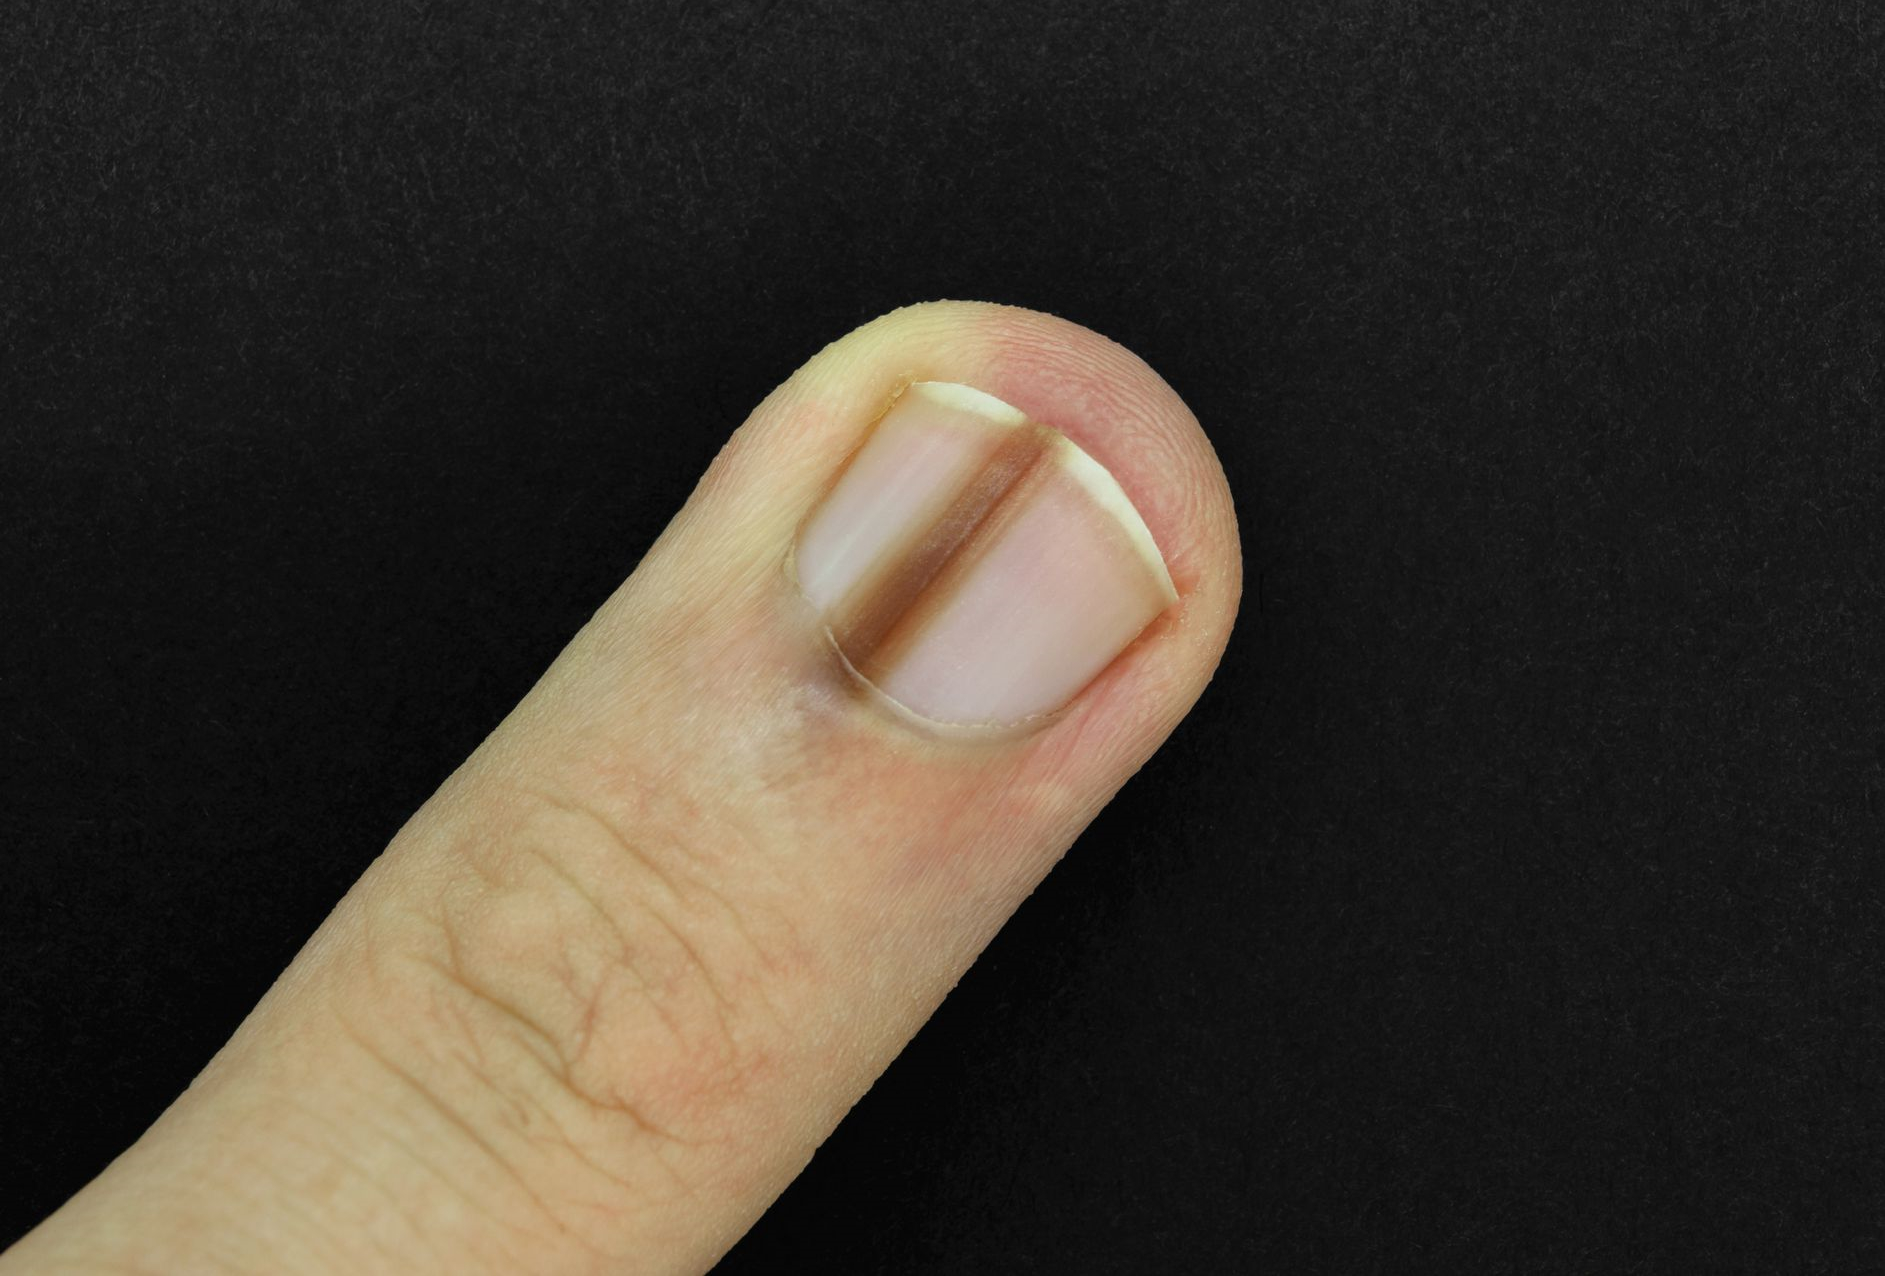 Melanoma under toenail pictures black spot, nail melanoma pictures